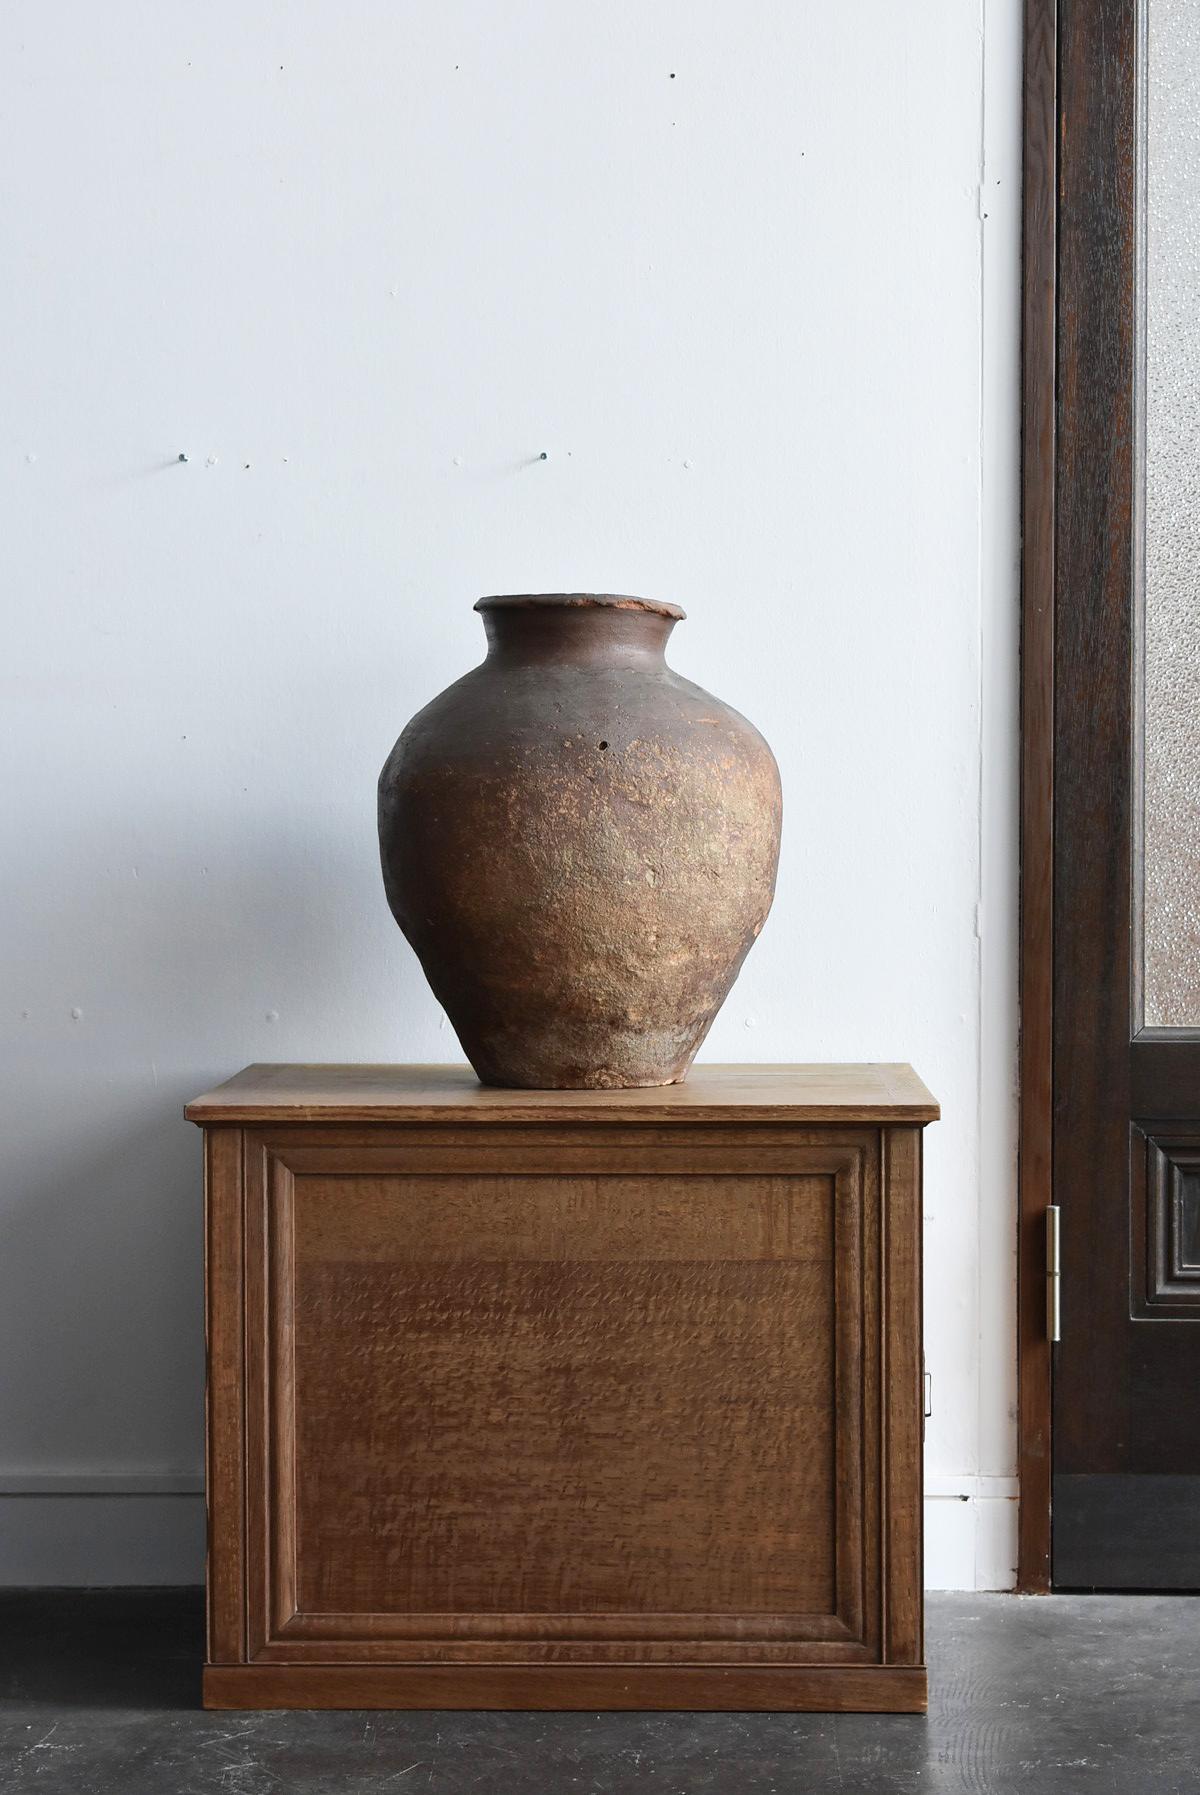 Other Japanese Antique Jar 1400s-1500s / Antique Vase 'Tokoname' / Wabi-Sabi Art